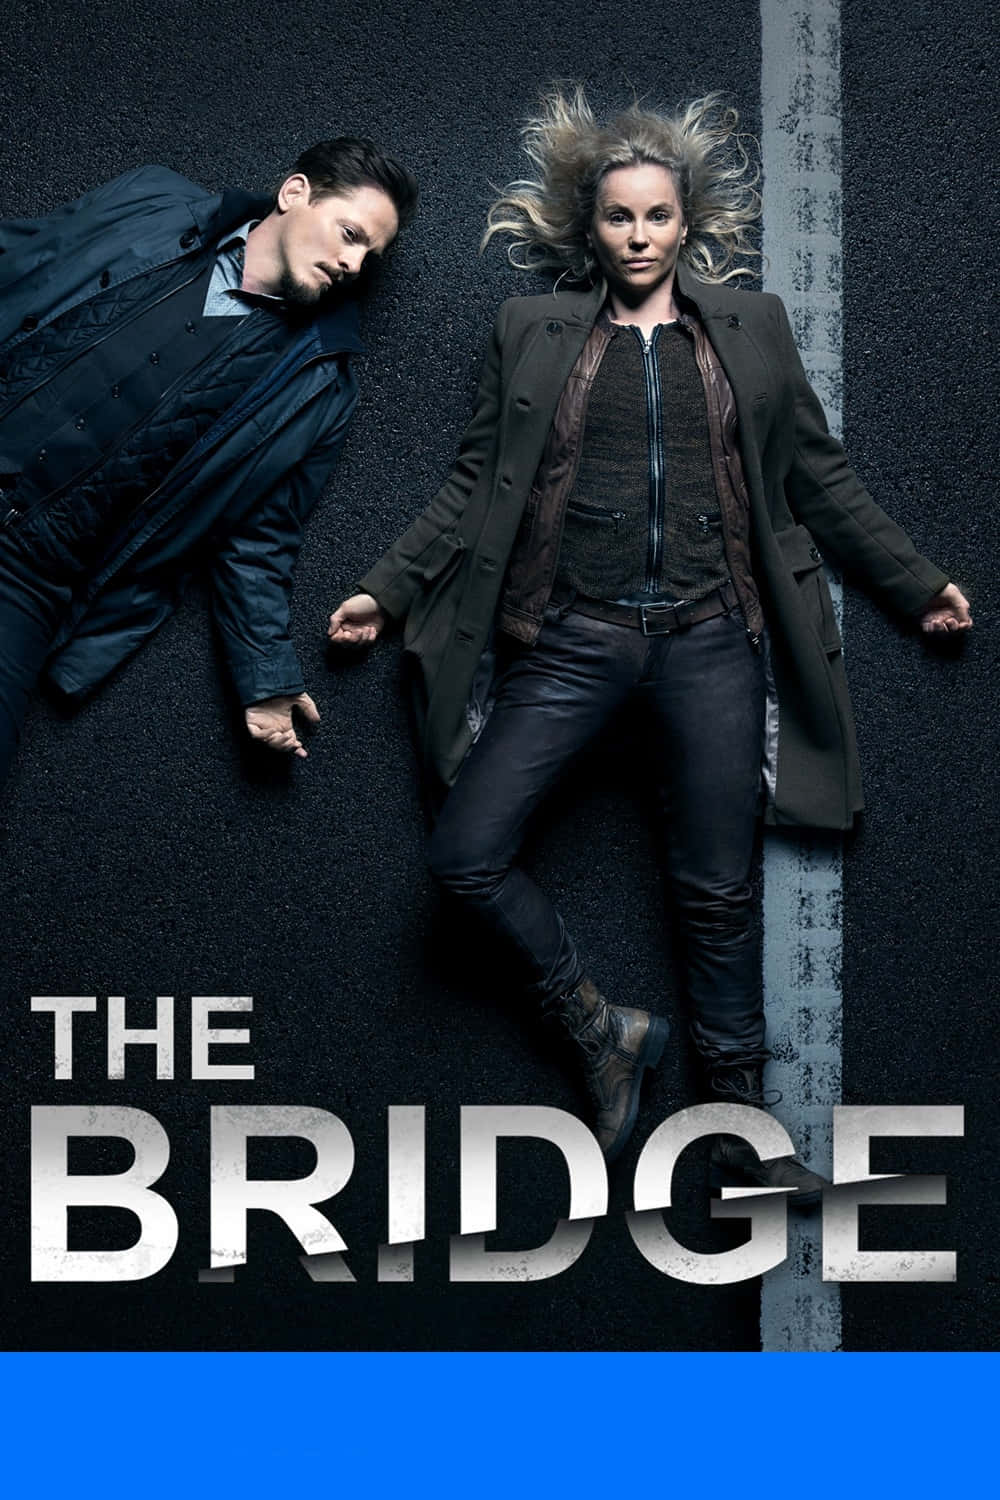 The Bridge - Gritty Crime Drama Wallpaper